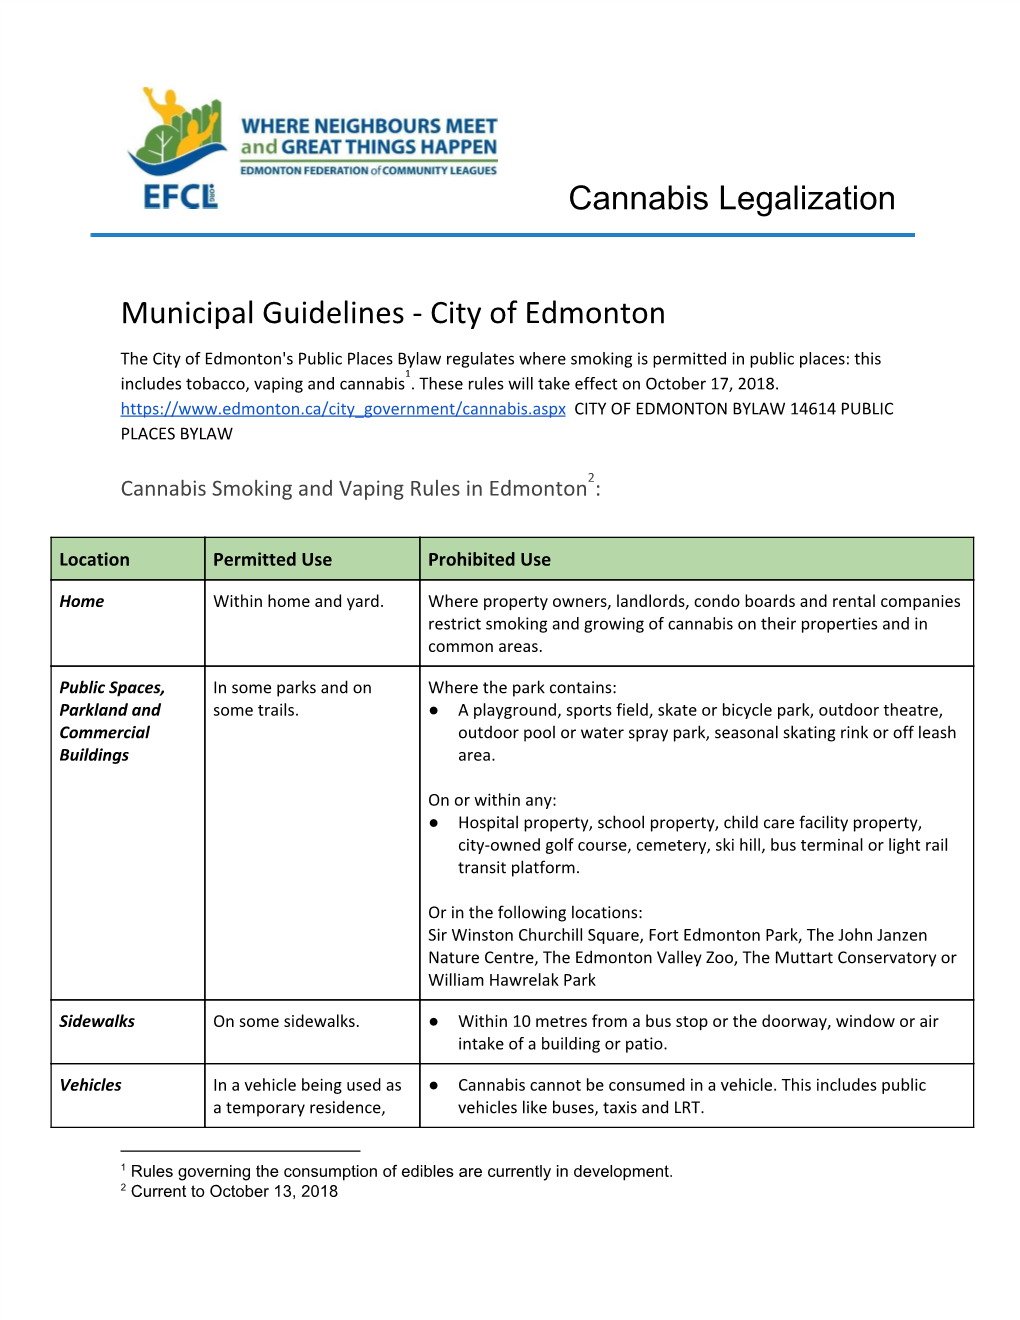 Cannabis Legalization Municipal Guidelines